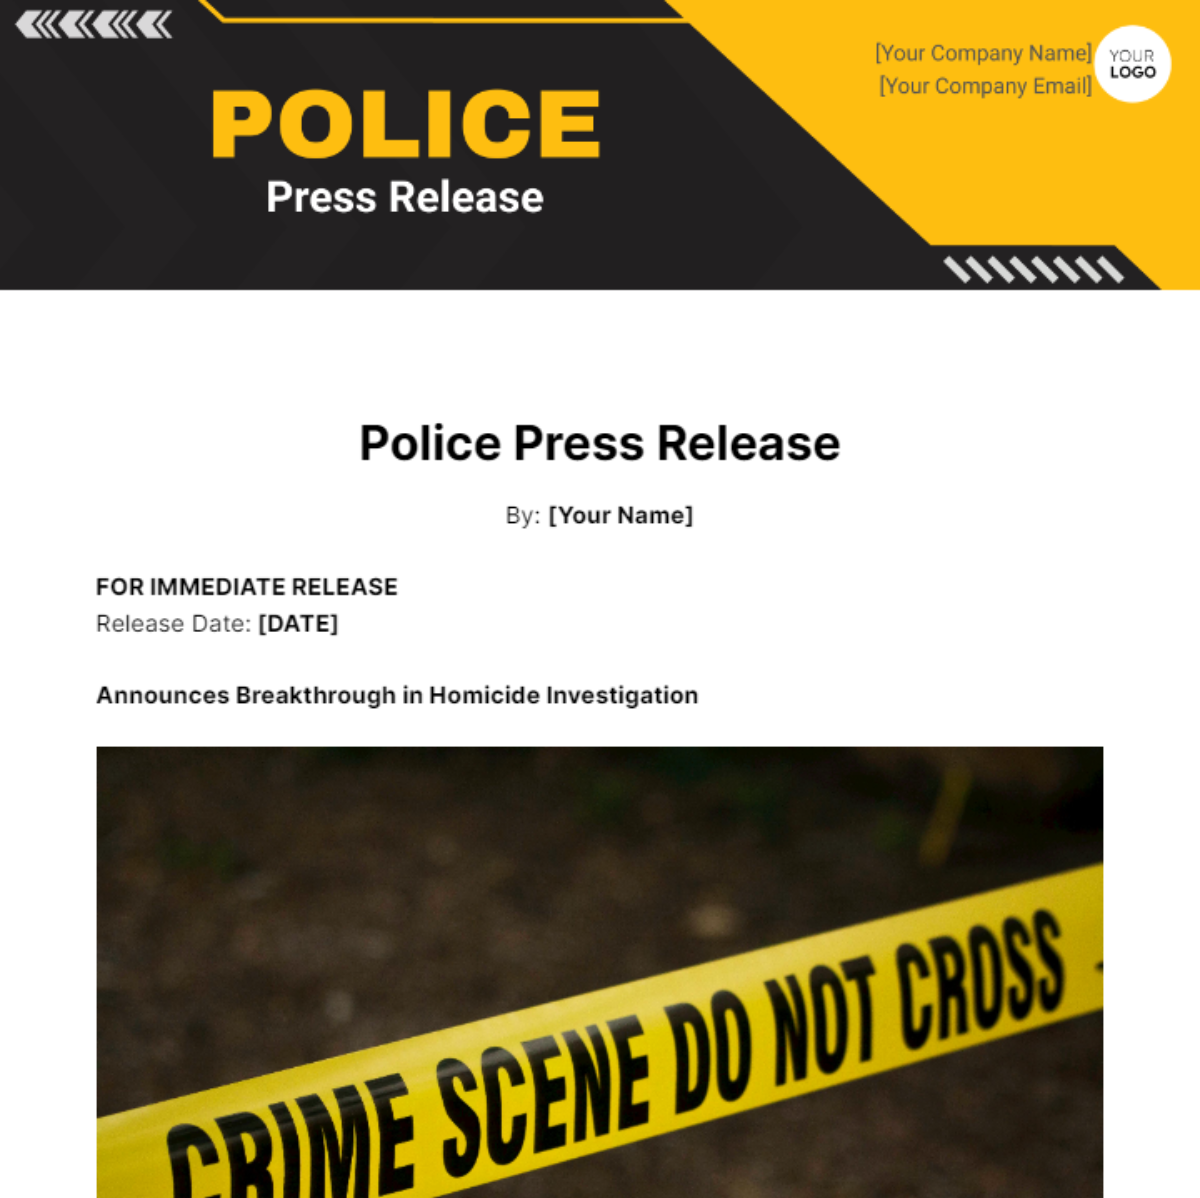 Police Press Release Template